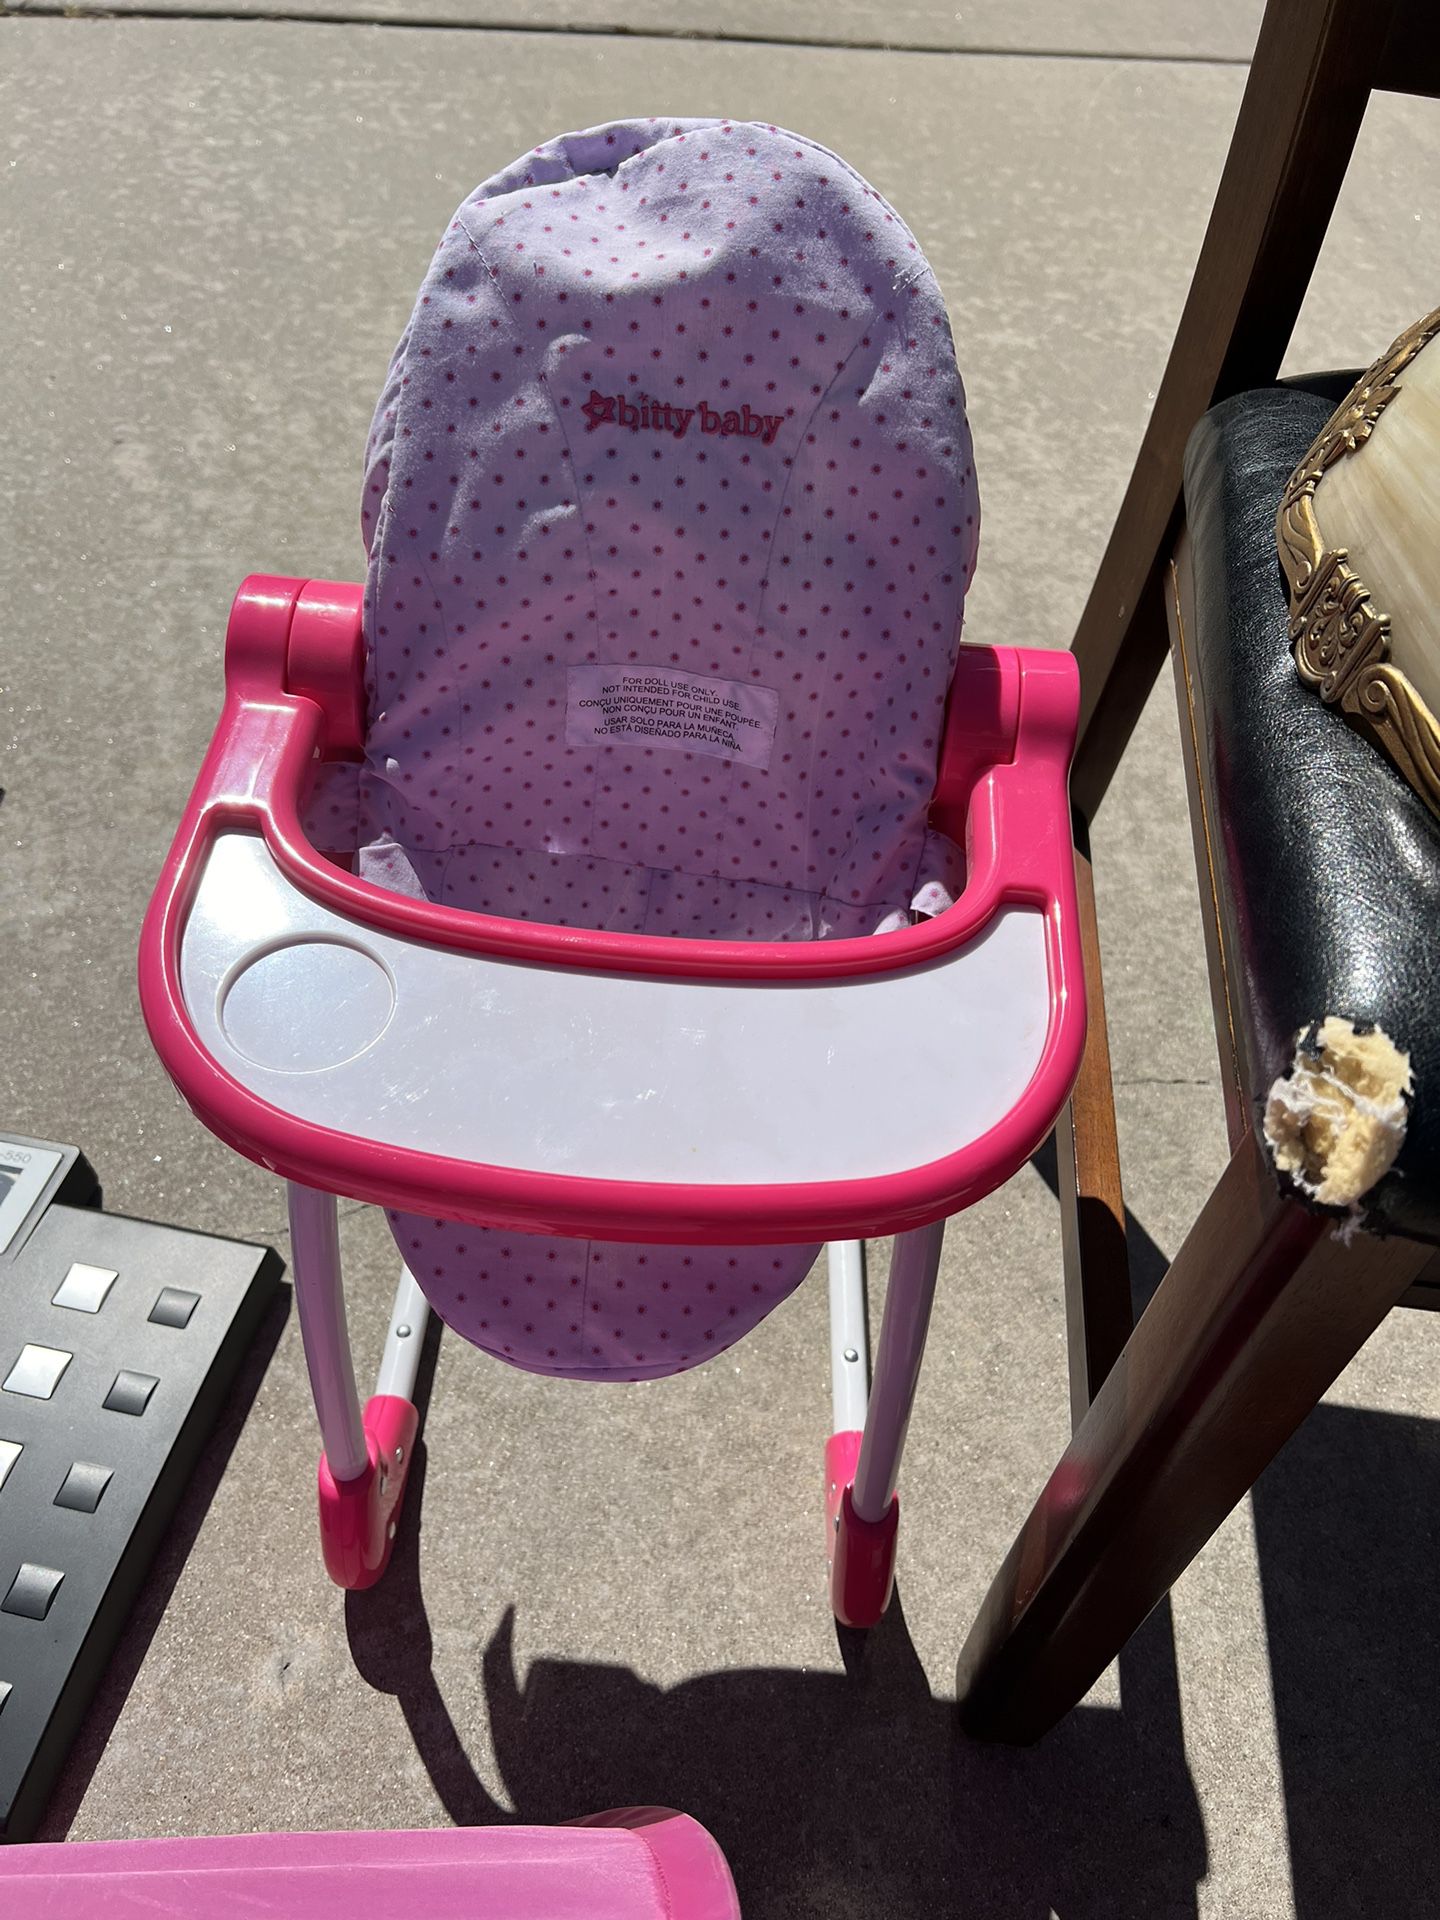 American Girl Bitty baby High Chair